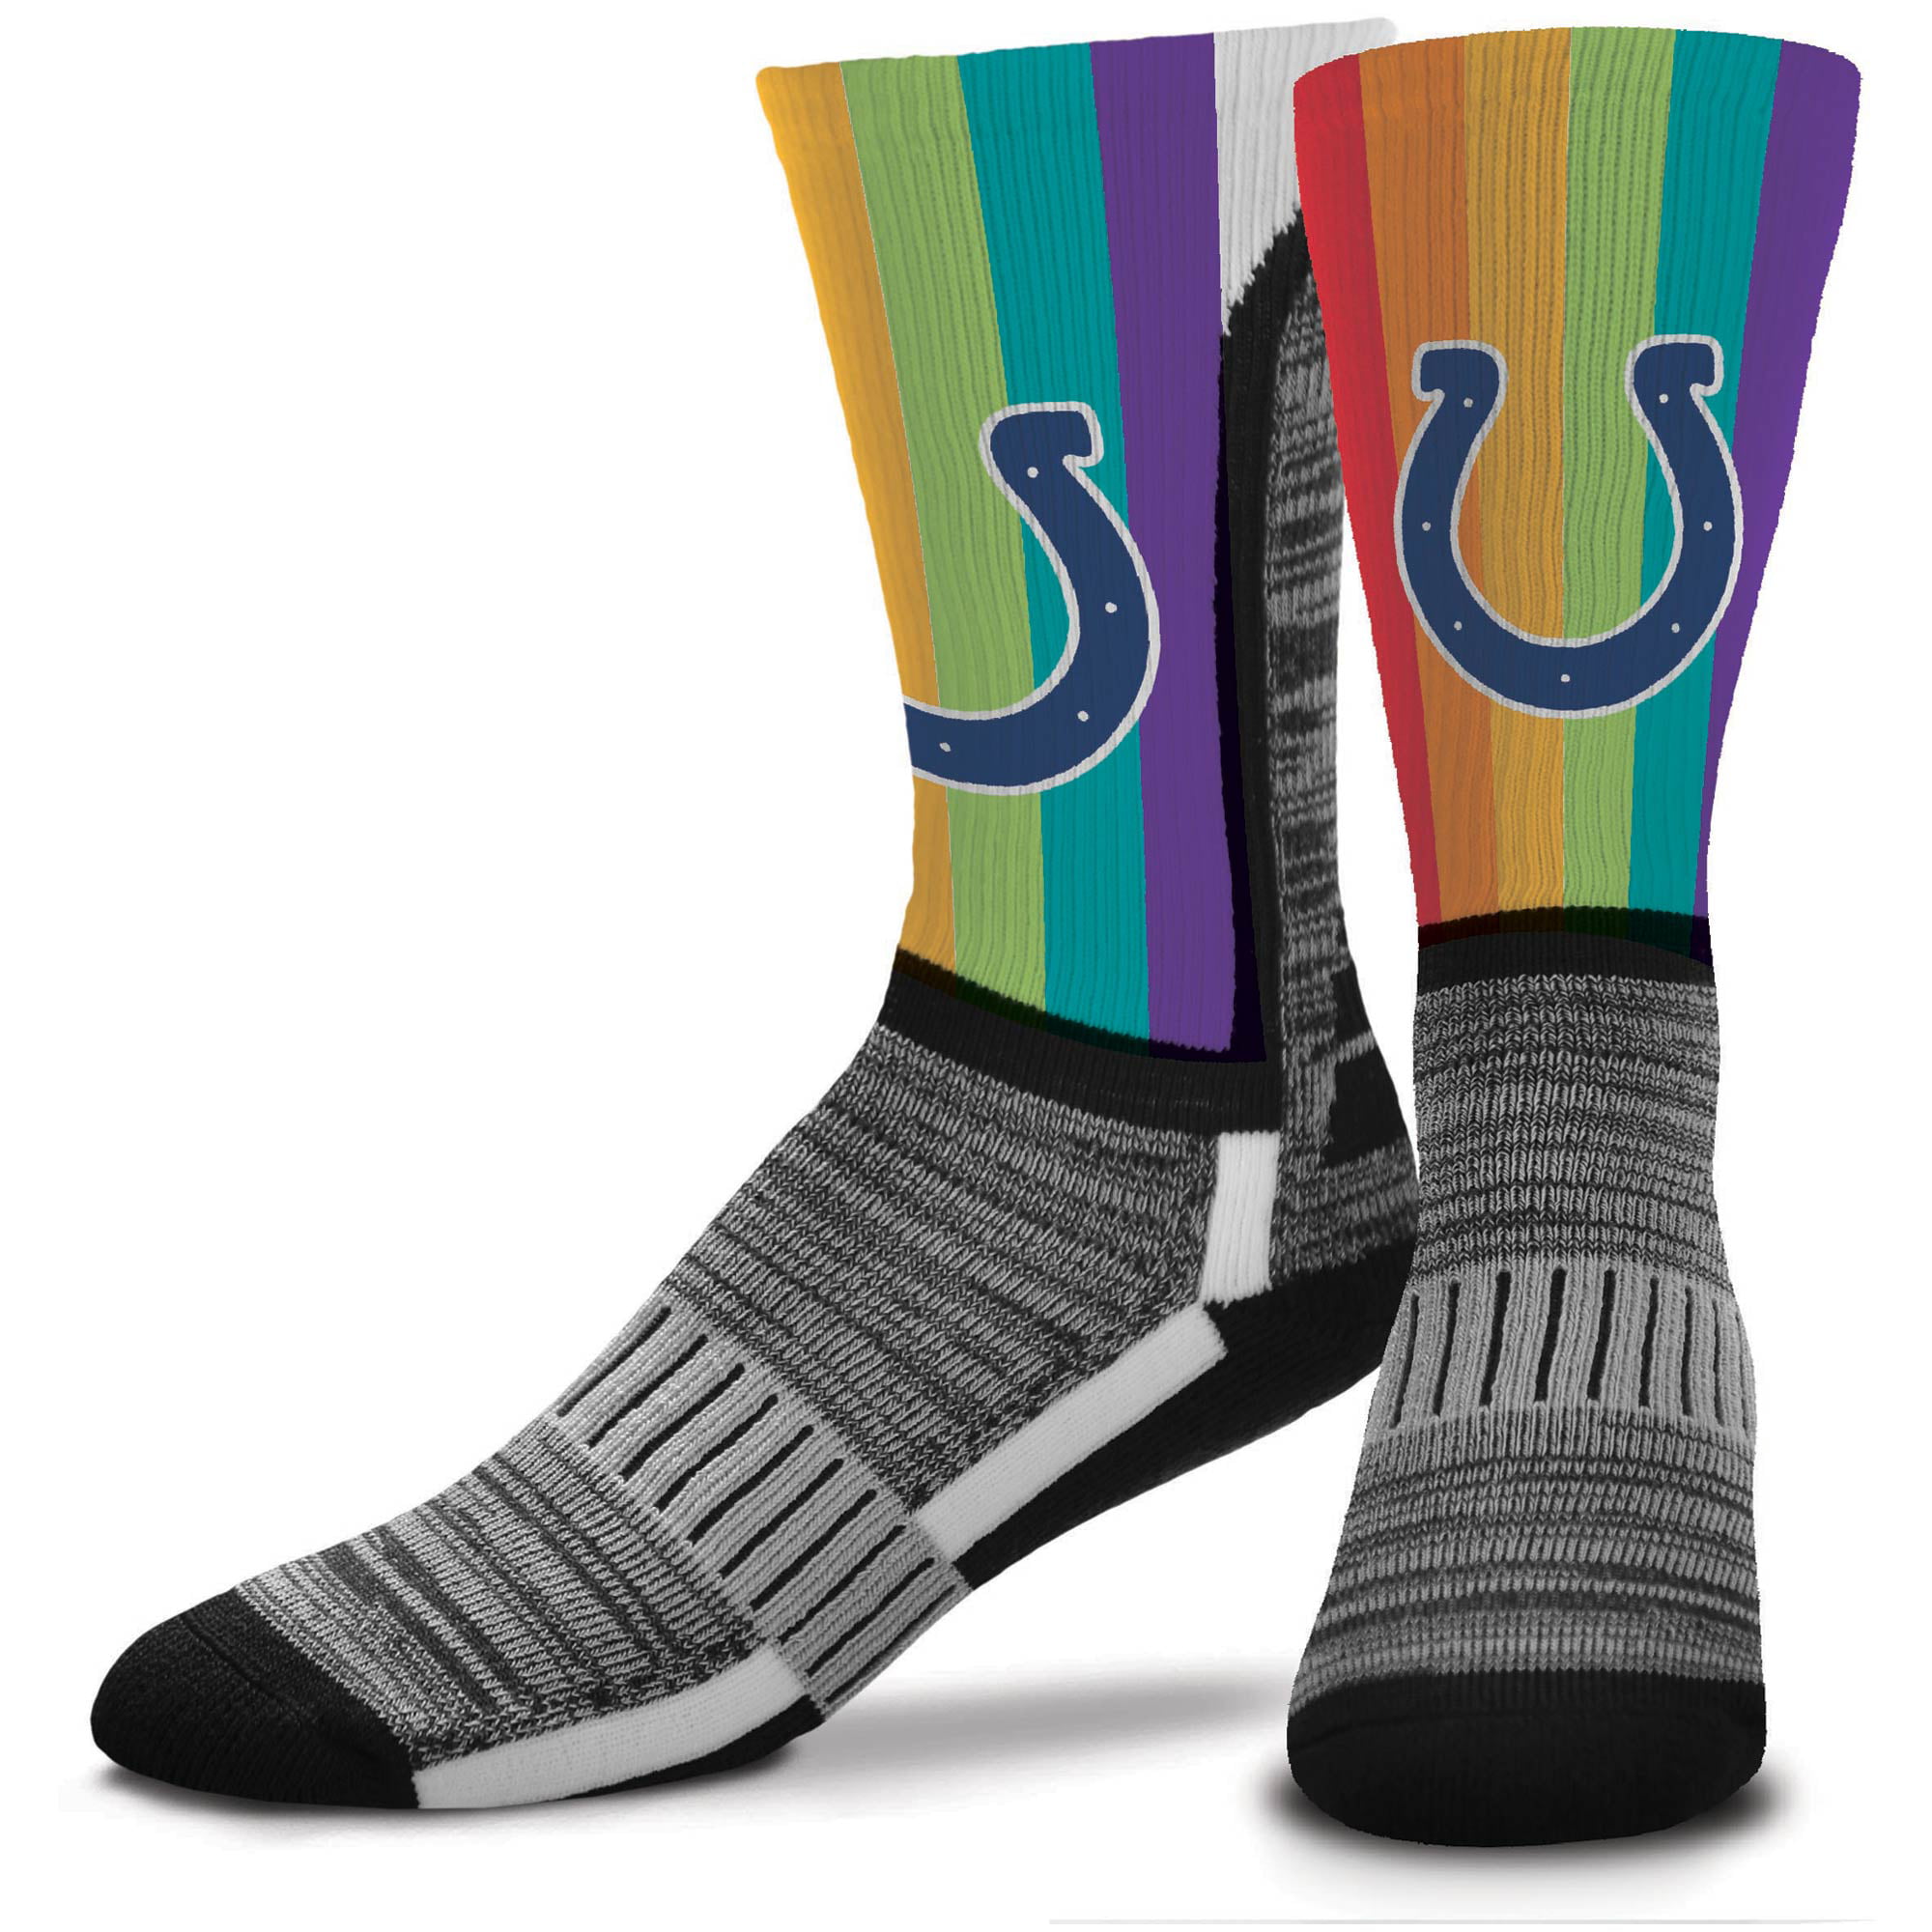 For Bare Feet Mens NCAA-Downtown Crew Socks